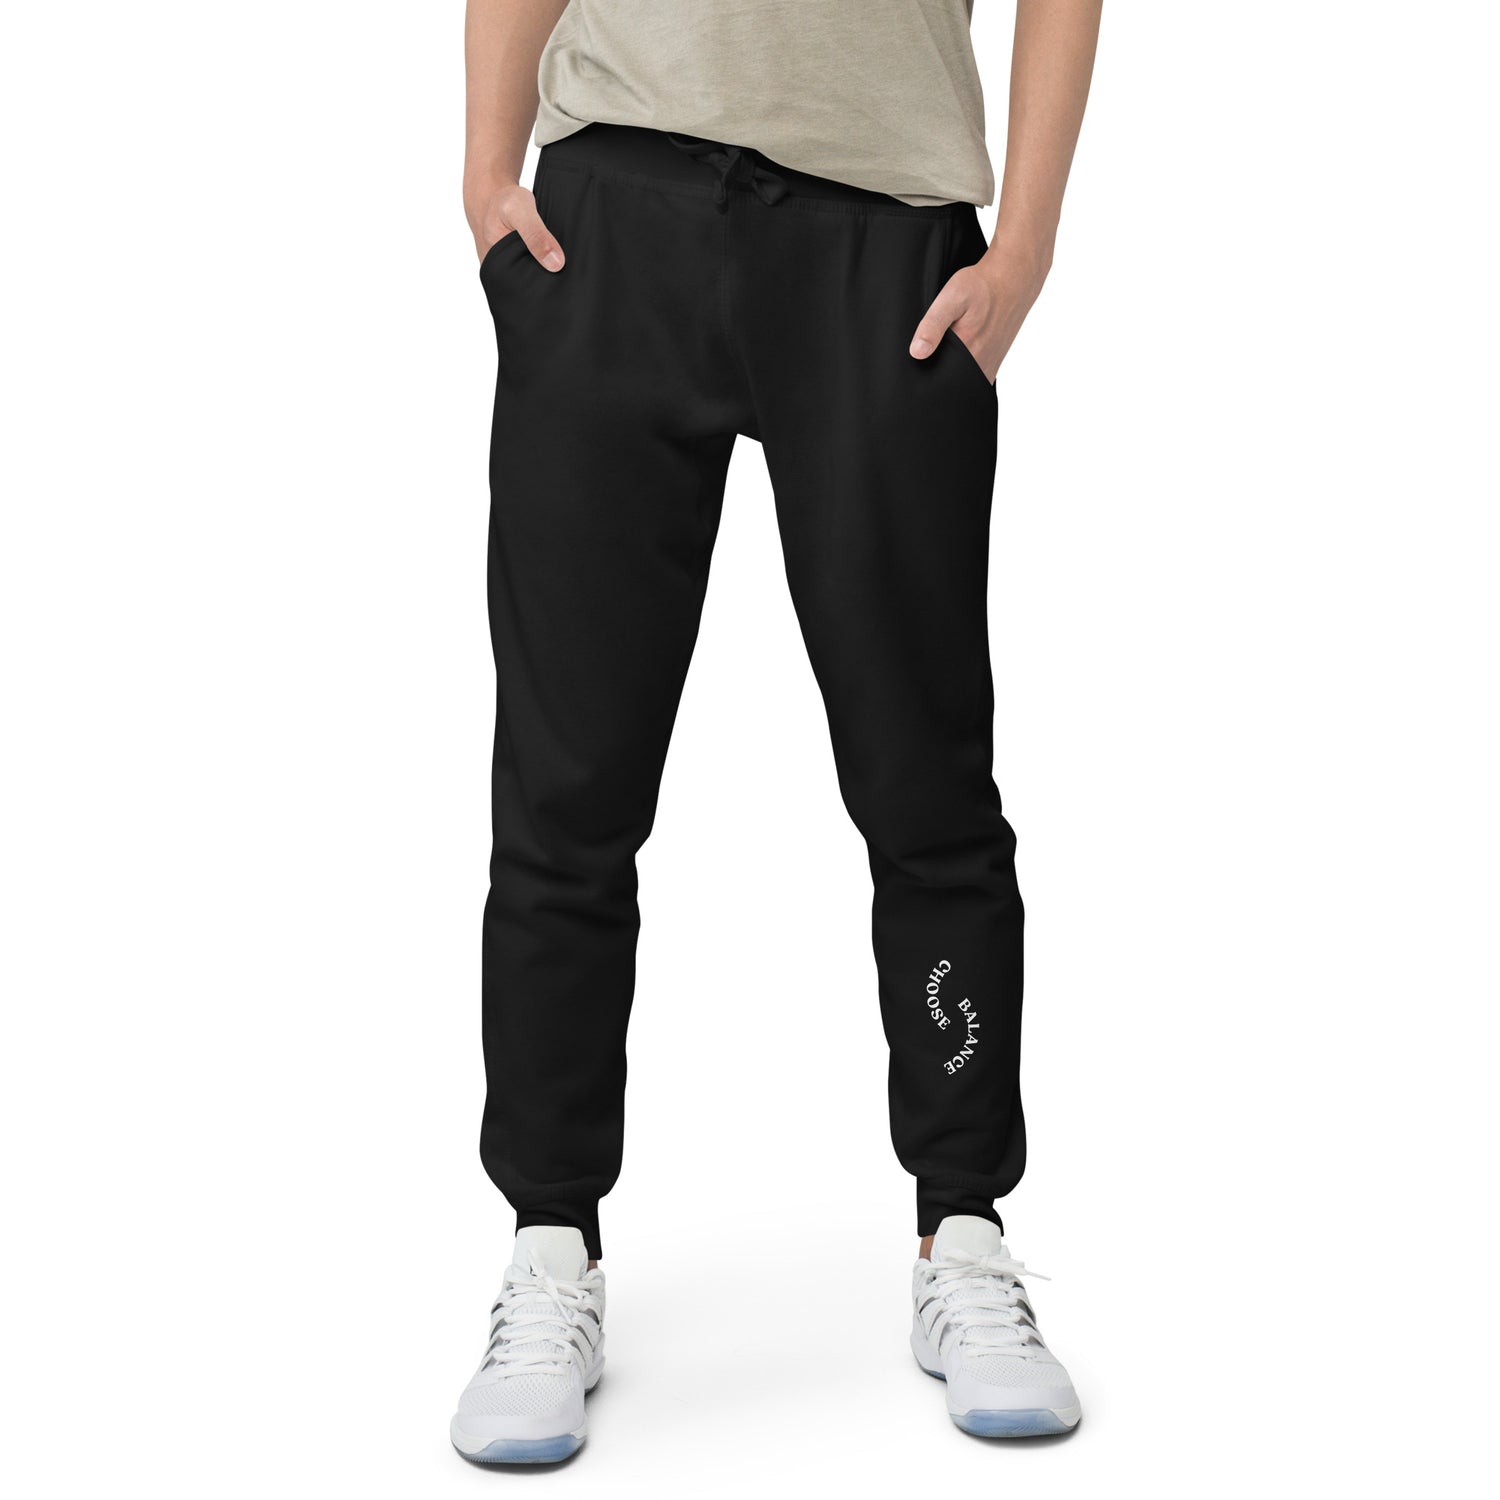 Closeup of Black Sweat pant with "Choose Balance" printed on left lower leg.